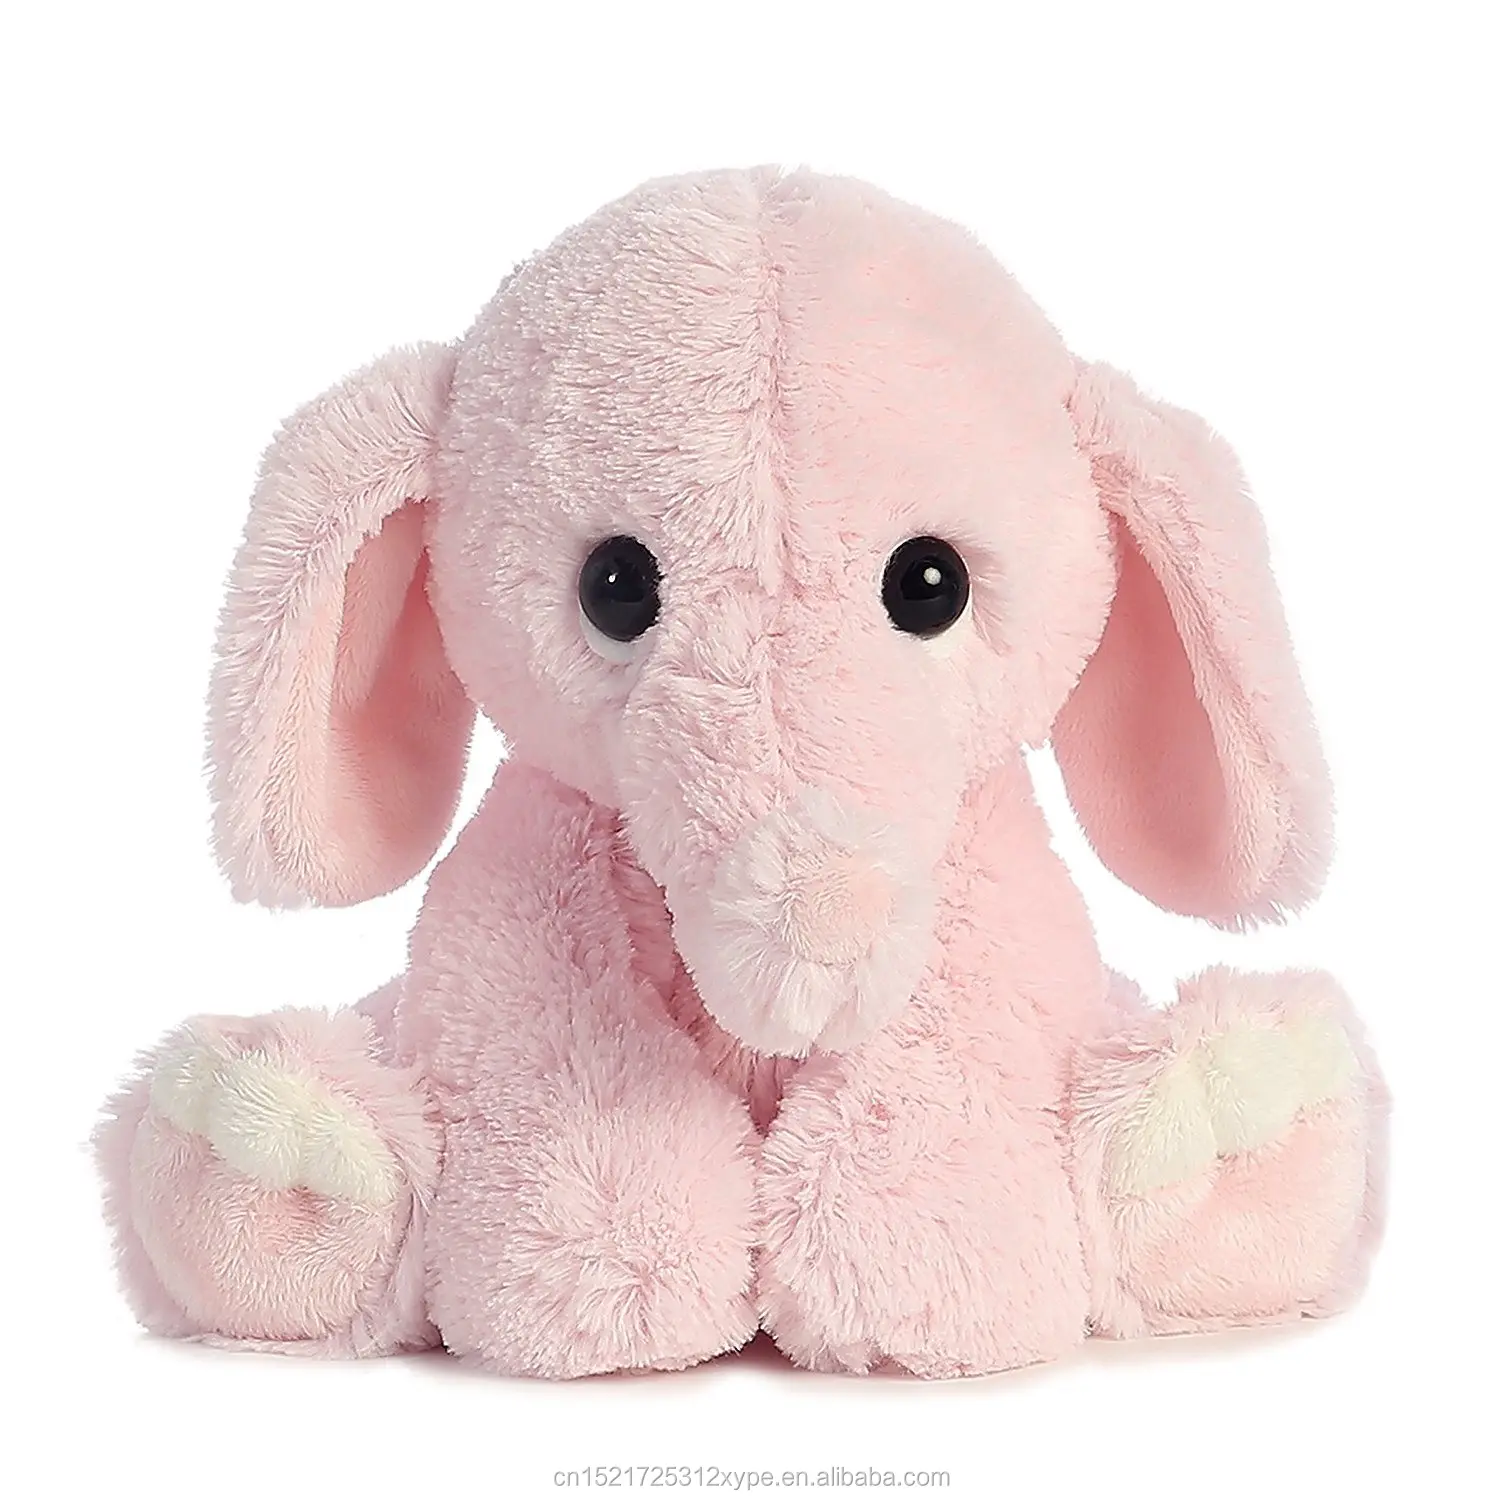 pink elephant toy